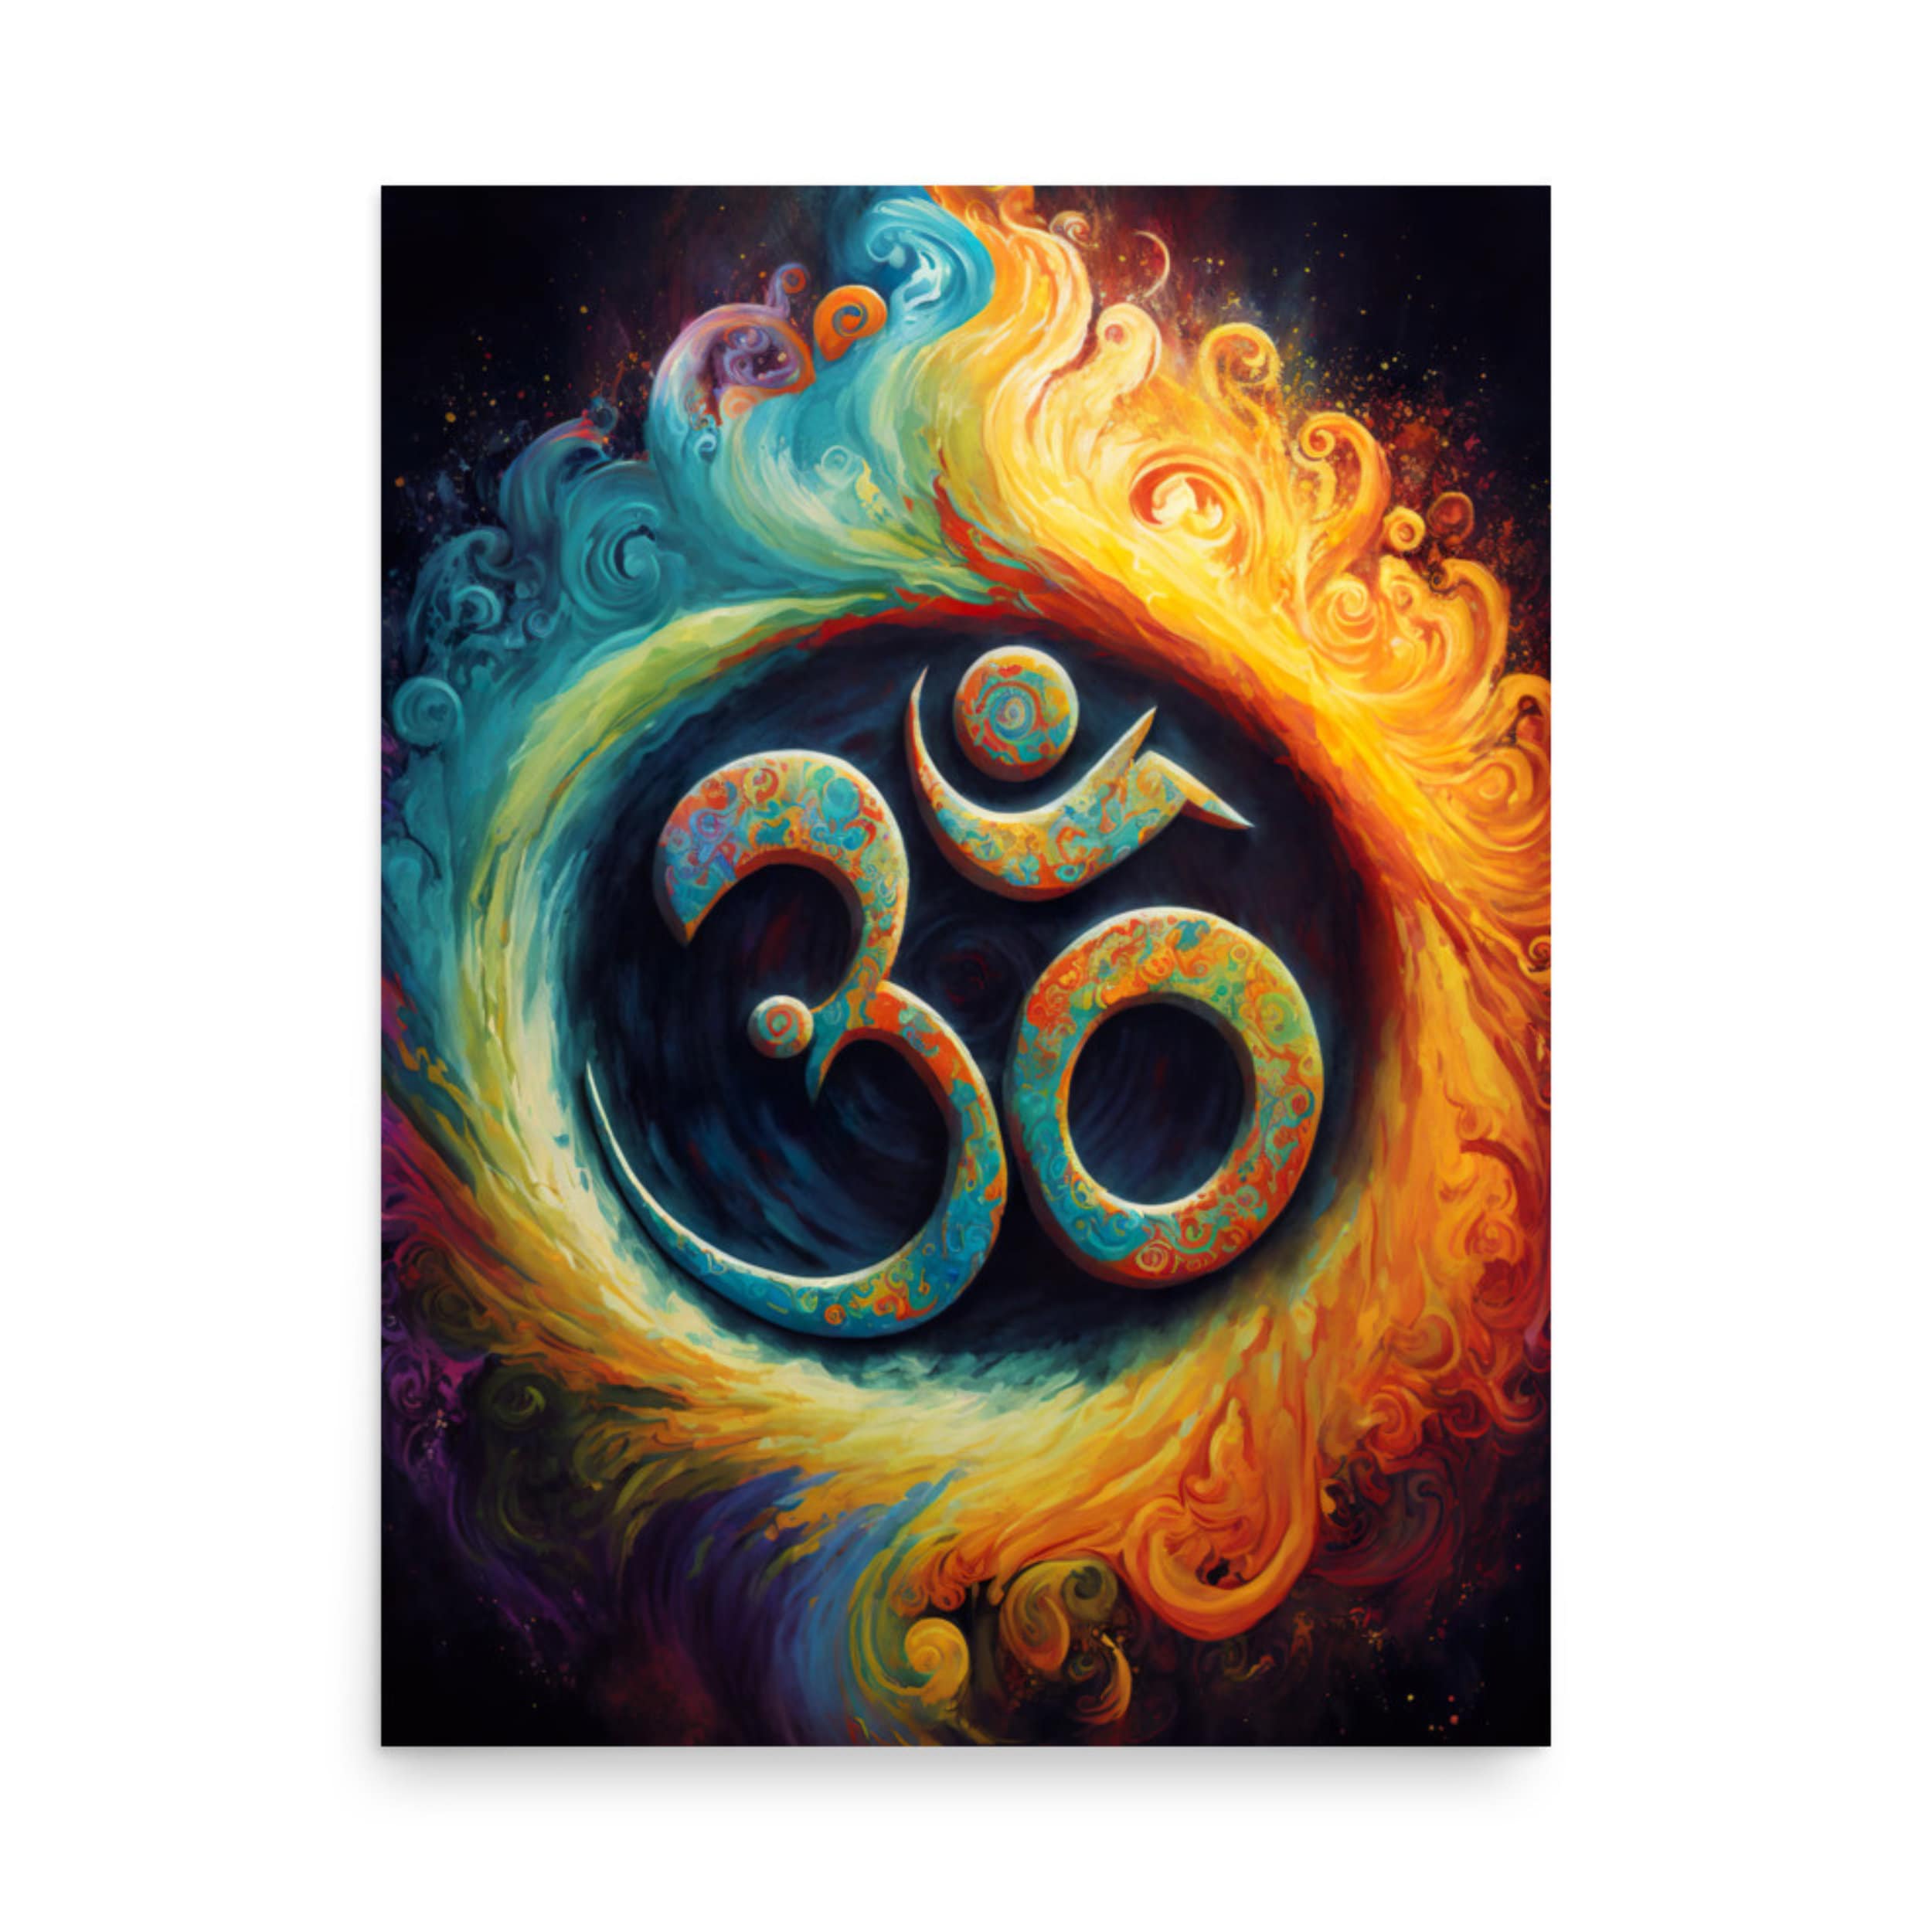 Share more than 149 karma symbol wallpaper - noithatsi.vn